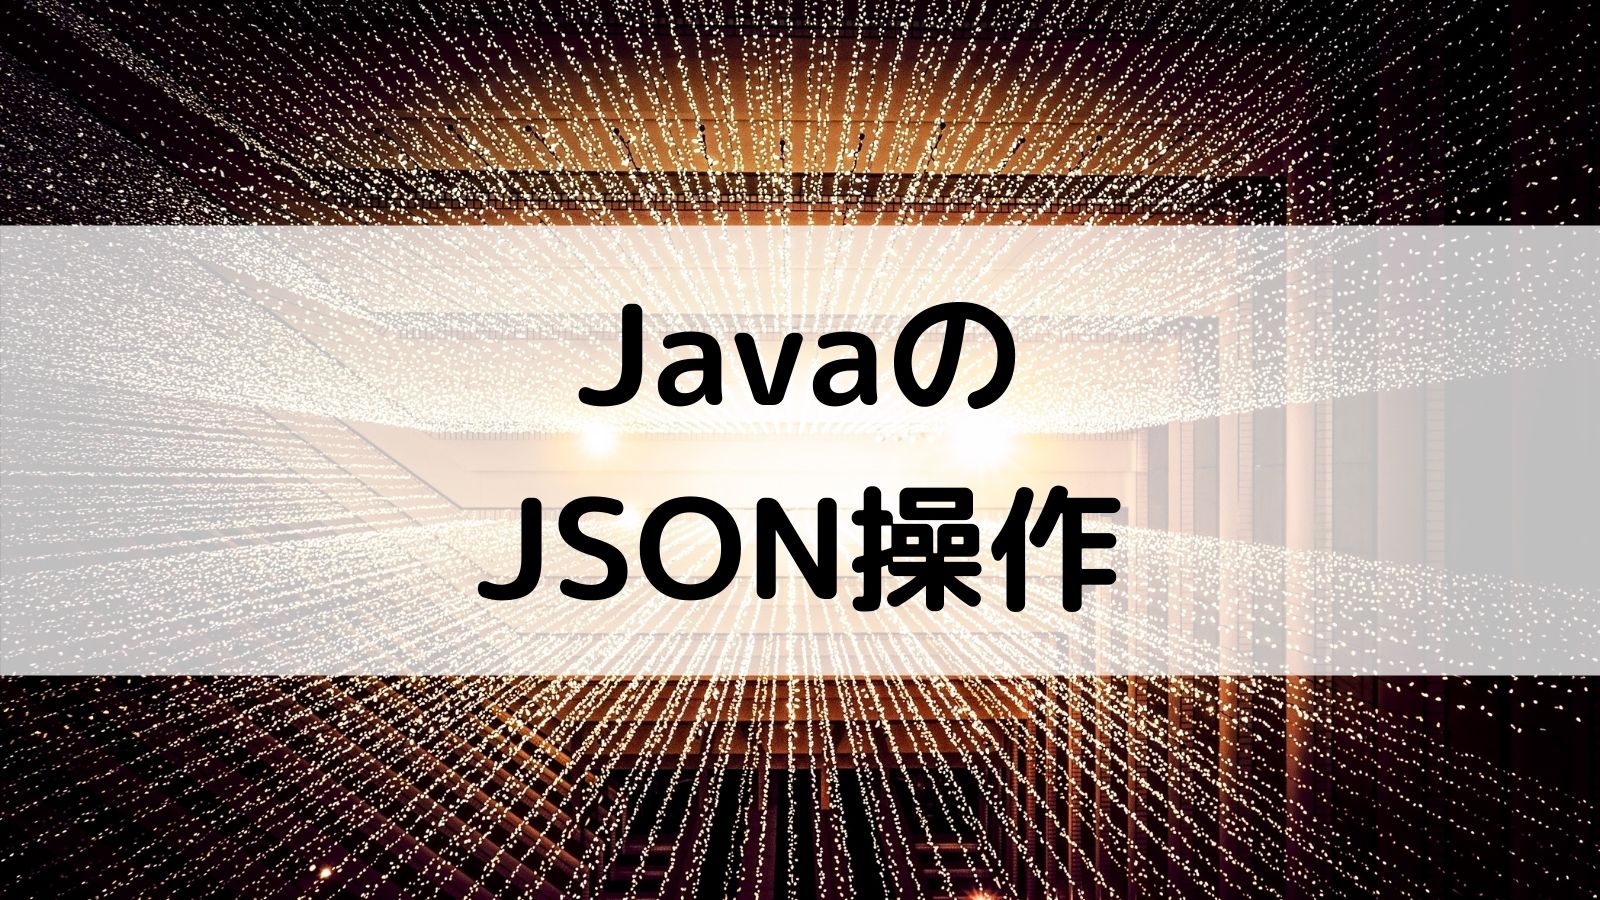 Javaのjson操作 プログラミング初心者向け教材